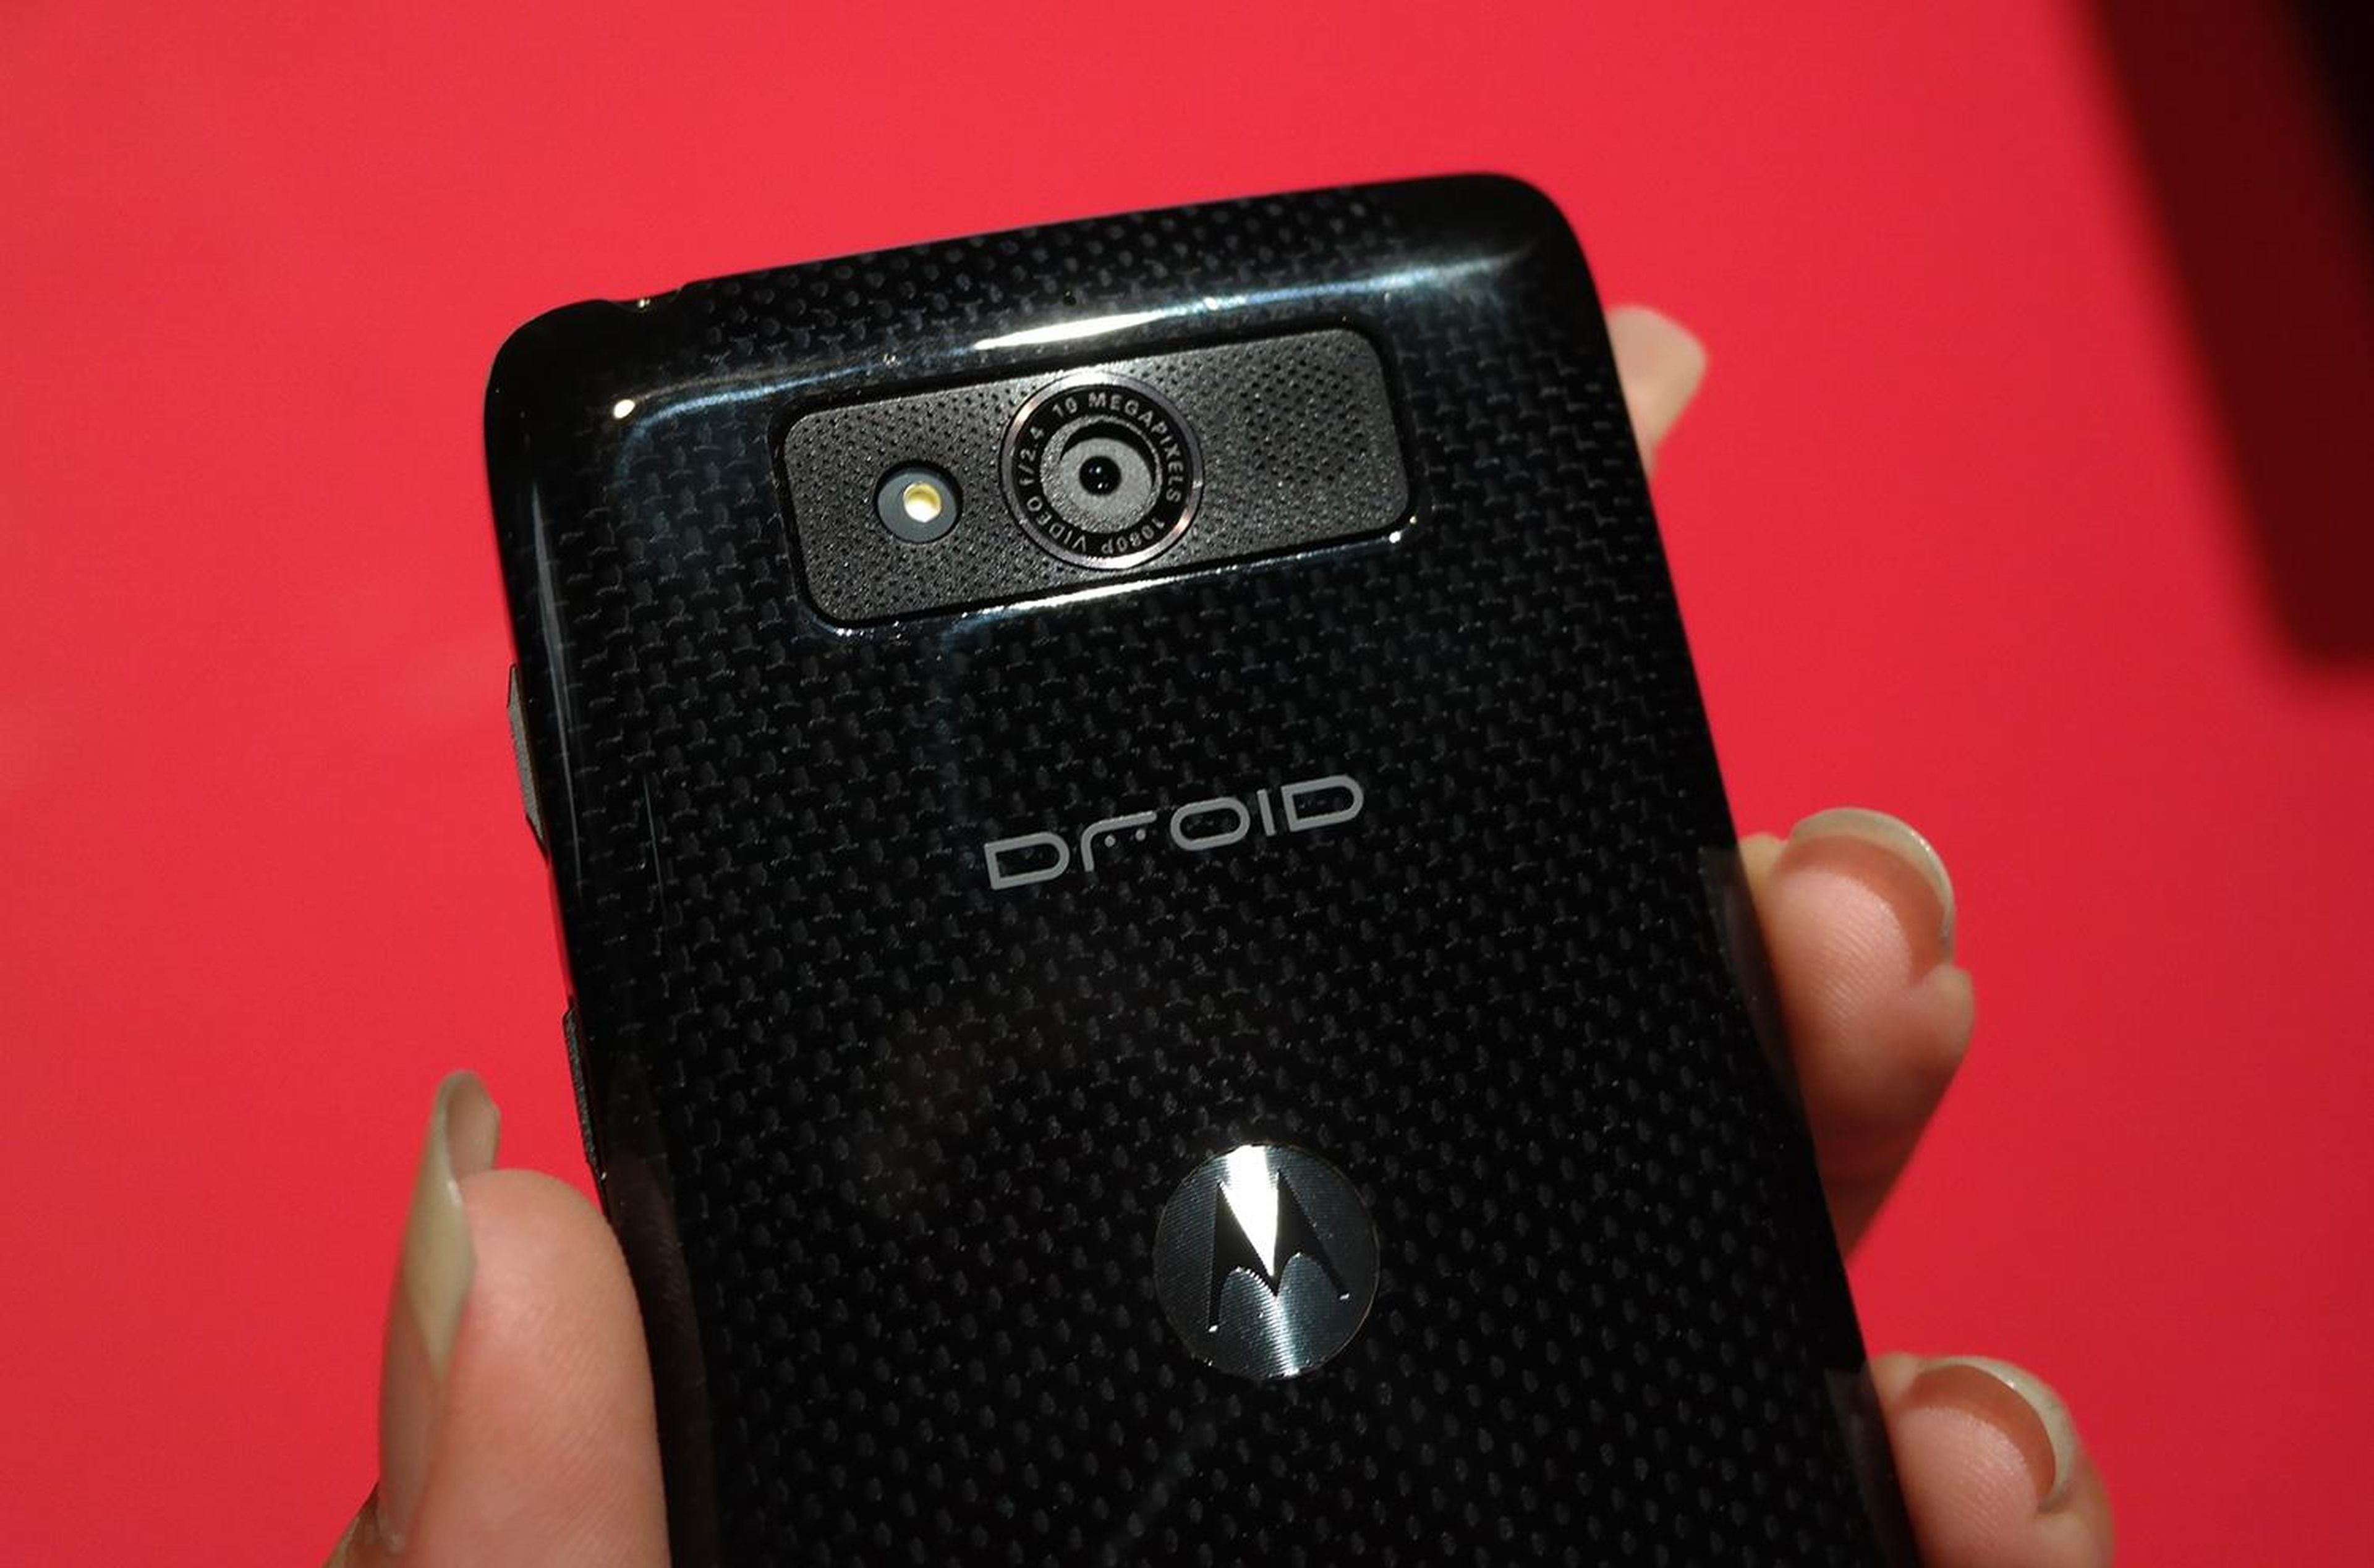 Motorola DROID Turbo, tendrá una pantalla con 640 dpi o ppp.